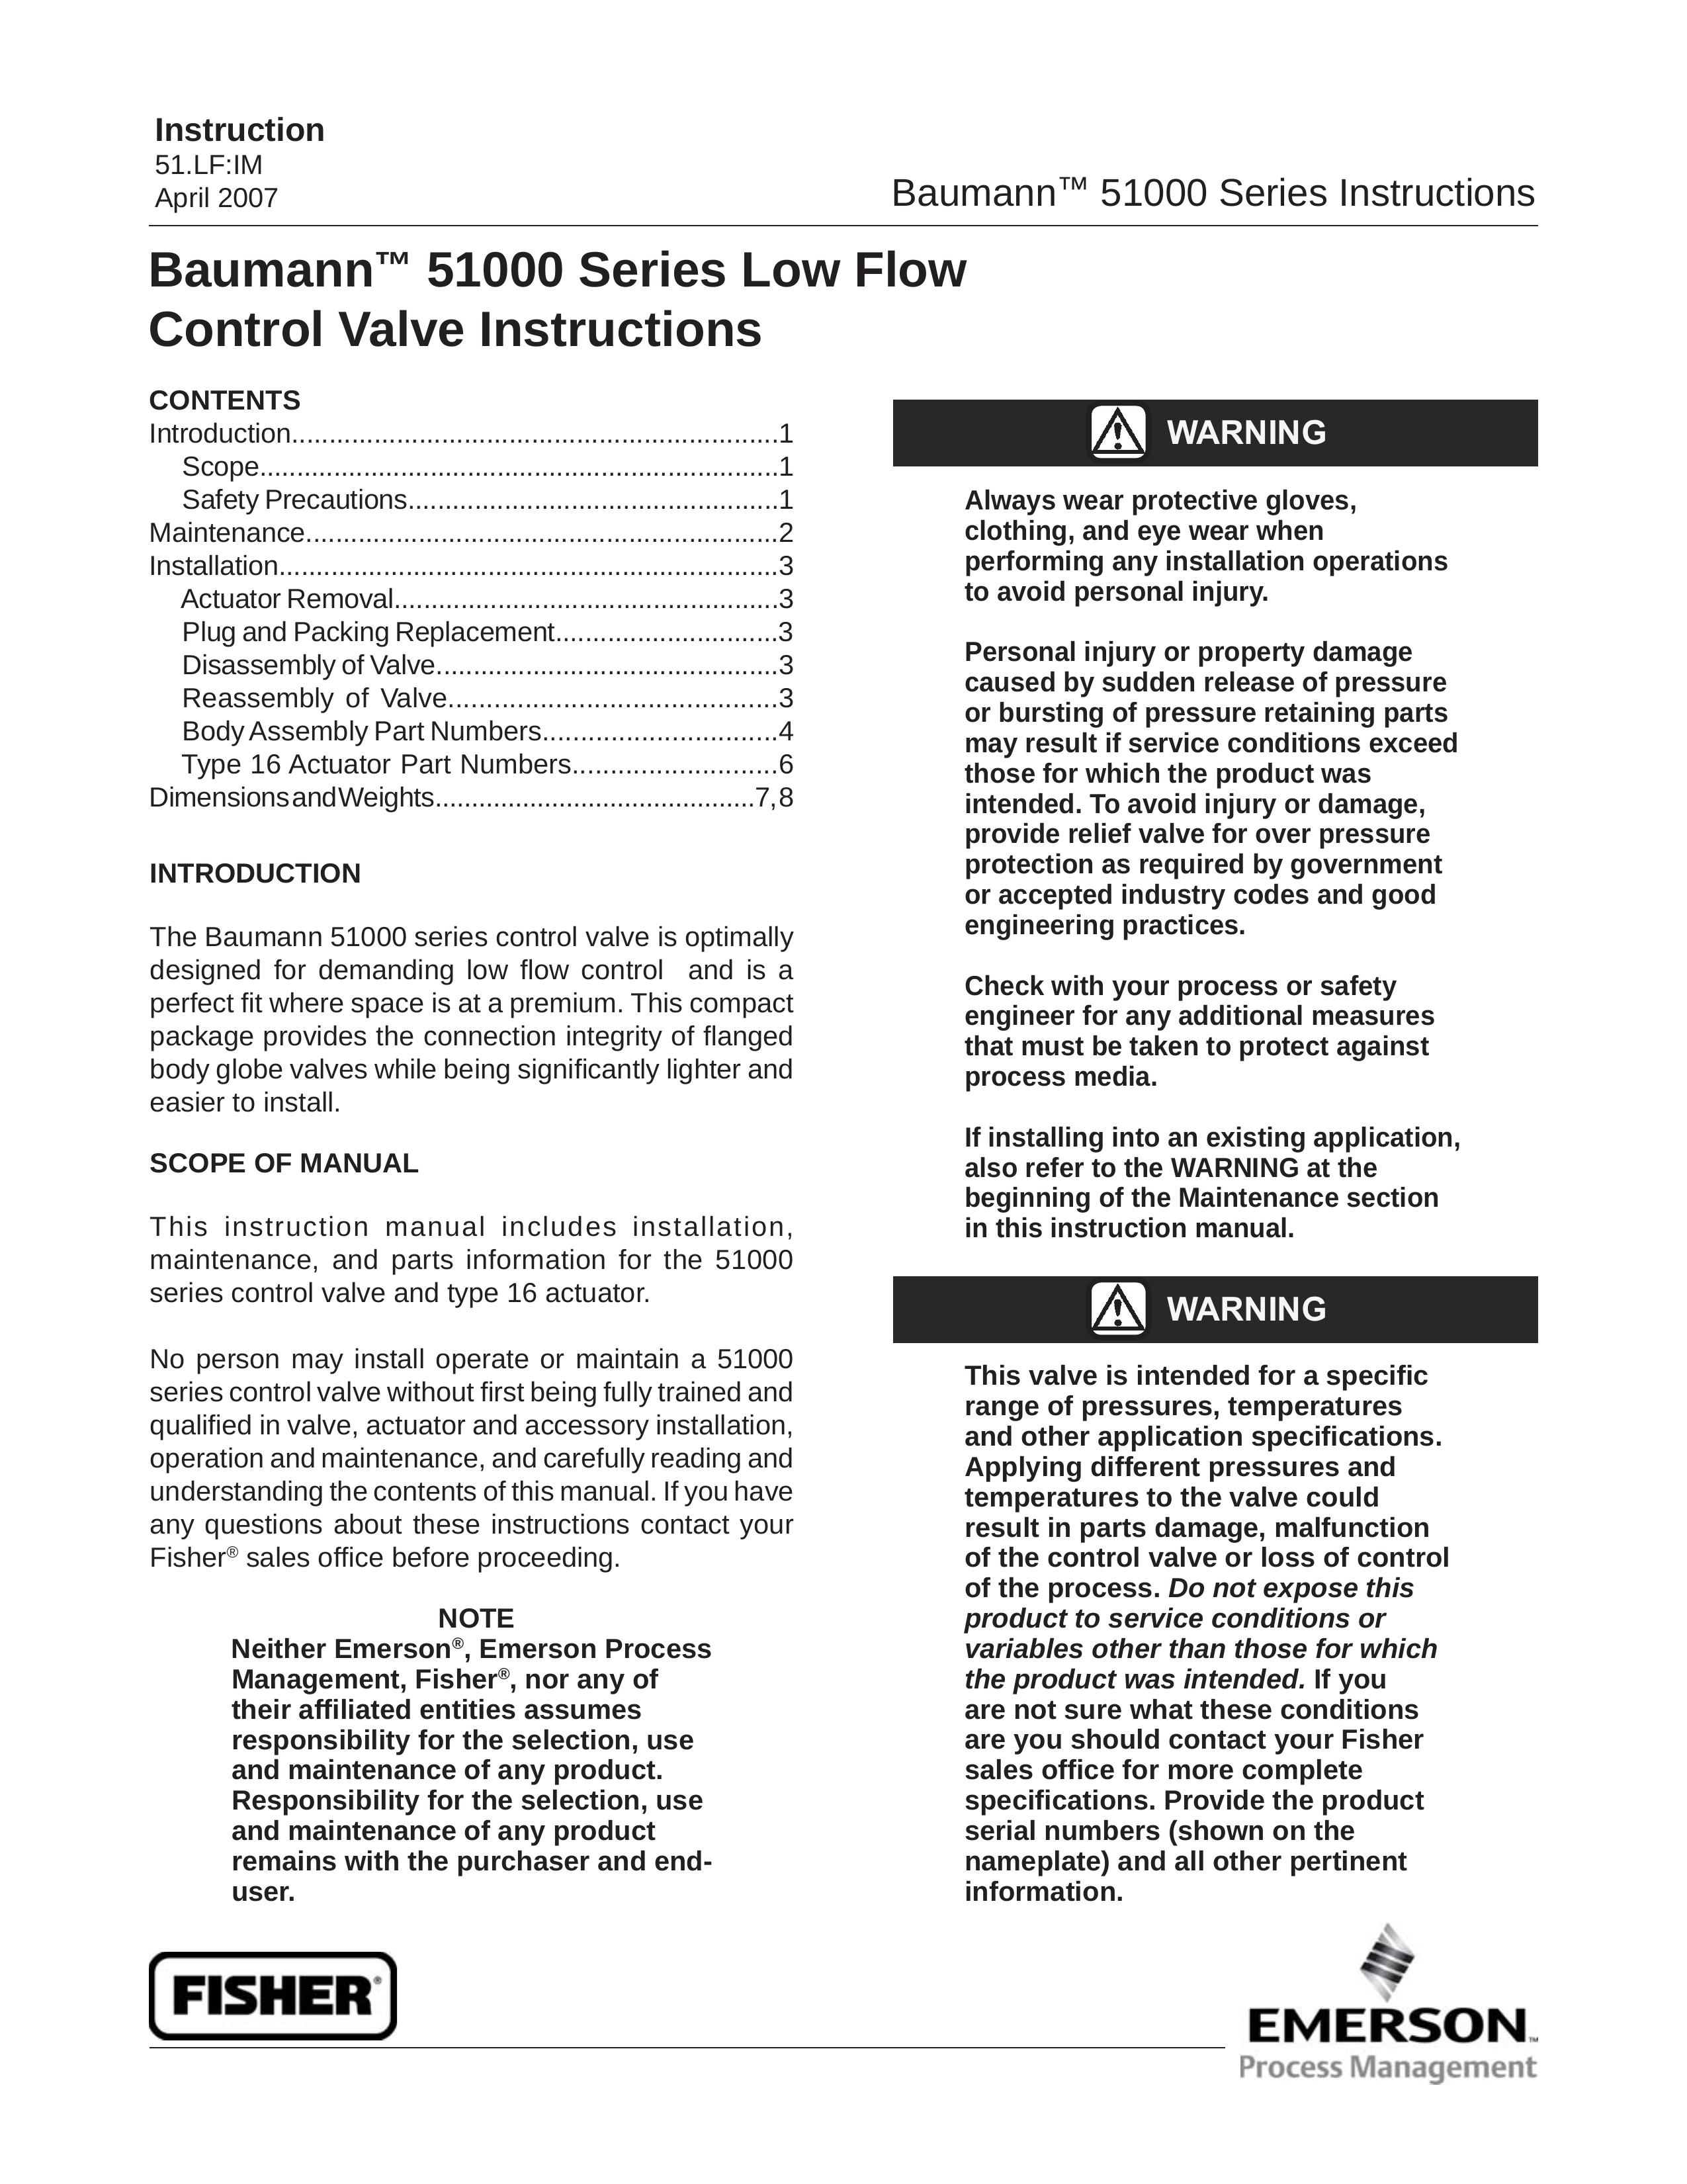 Emerson Process Management 51000 Marine Sanitation System User Manual